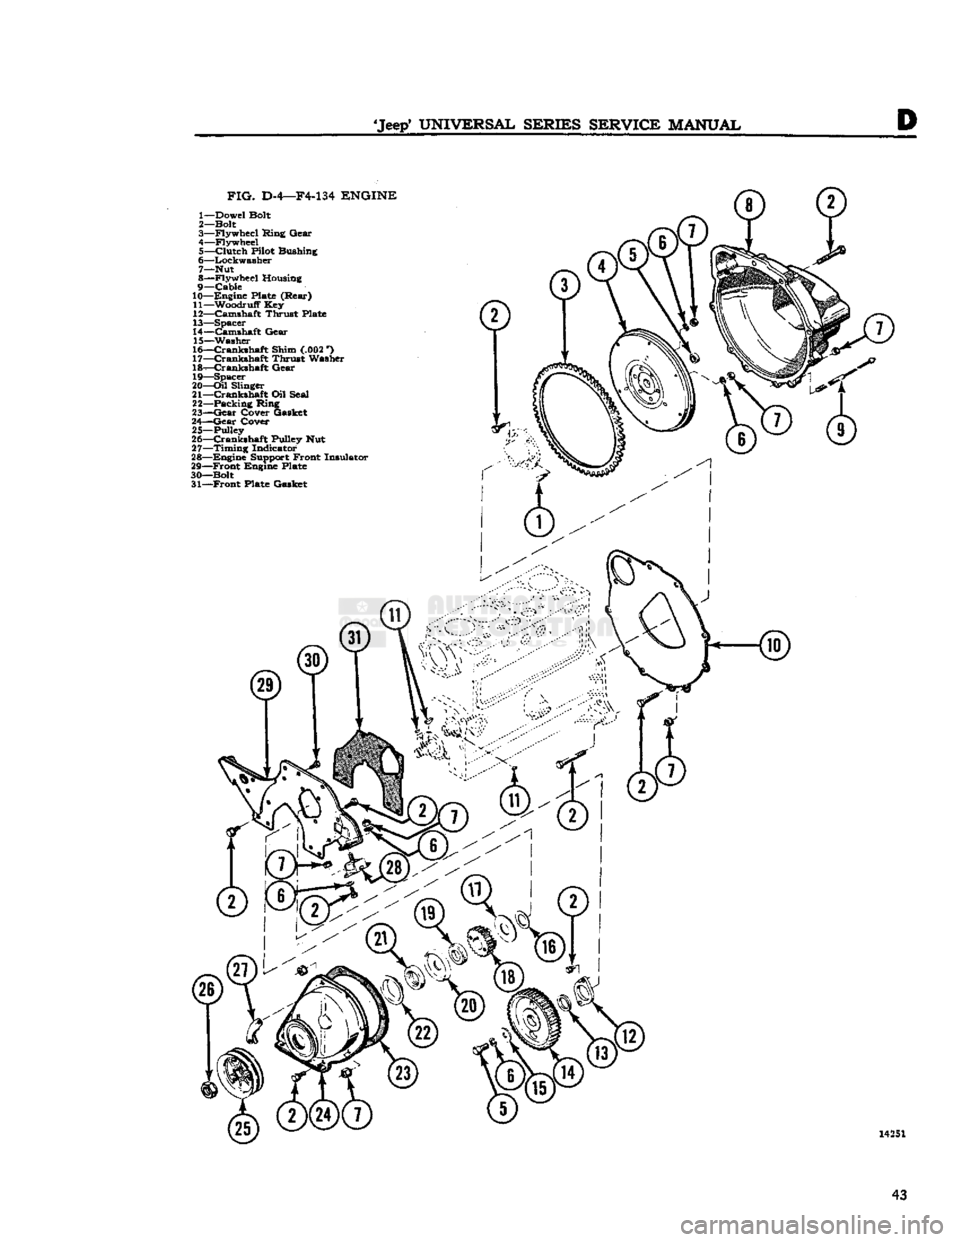 JEEP CJ 1953 Workshop Manual 
Jeep*
 UNIVERSAL SERIES SERVICE
 MANUAL 

FIG.
 D-4—F4-134
 ENGINE 

1— Dowel Bolt 
2— Bolt 
3— Flywheel Ring Gear 
4— Flywheel  5—
 Clutch
 Pilot Bushing 
6— Lockwasher 
7— Nut 
8�